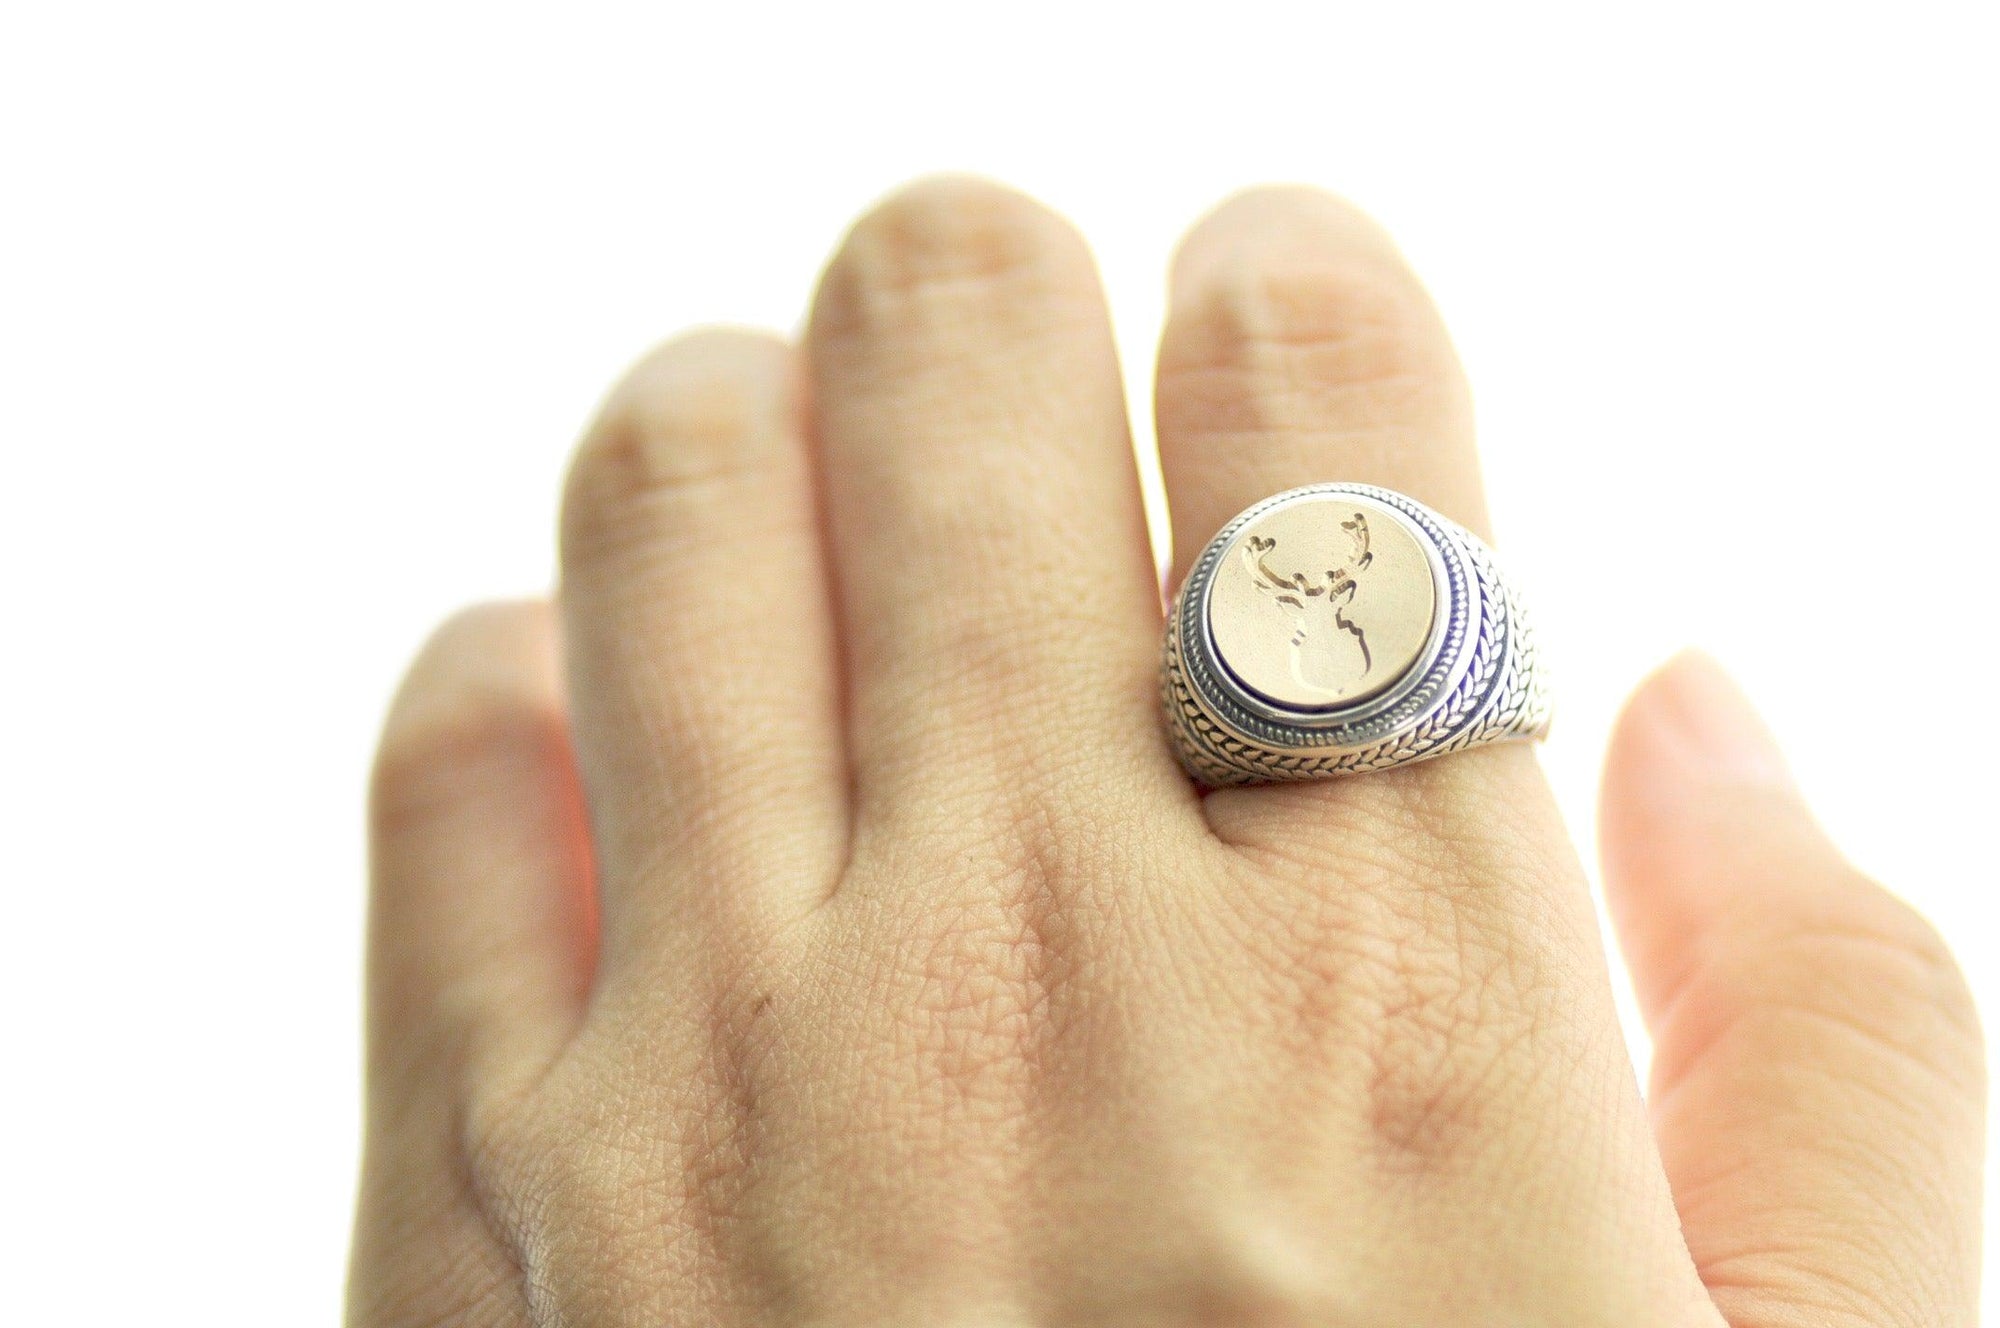 Antler Signet Ring - Backtozero B20 - 12mm ring, 12w, Animal, Antler, Deer, deer stag, him, ring, signet ring, size 10, size 7, size 8, size 9, wax seal, wax seal ring